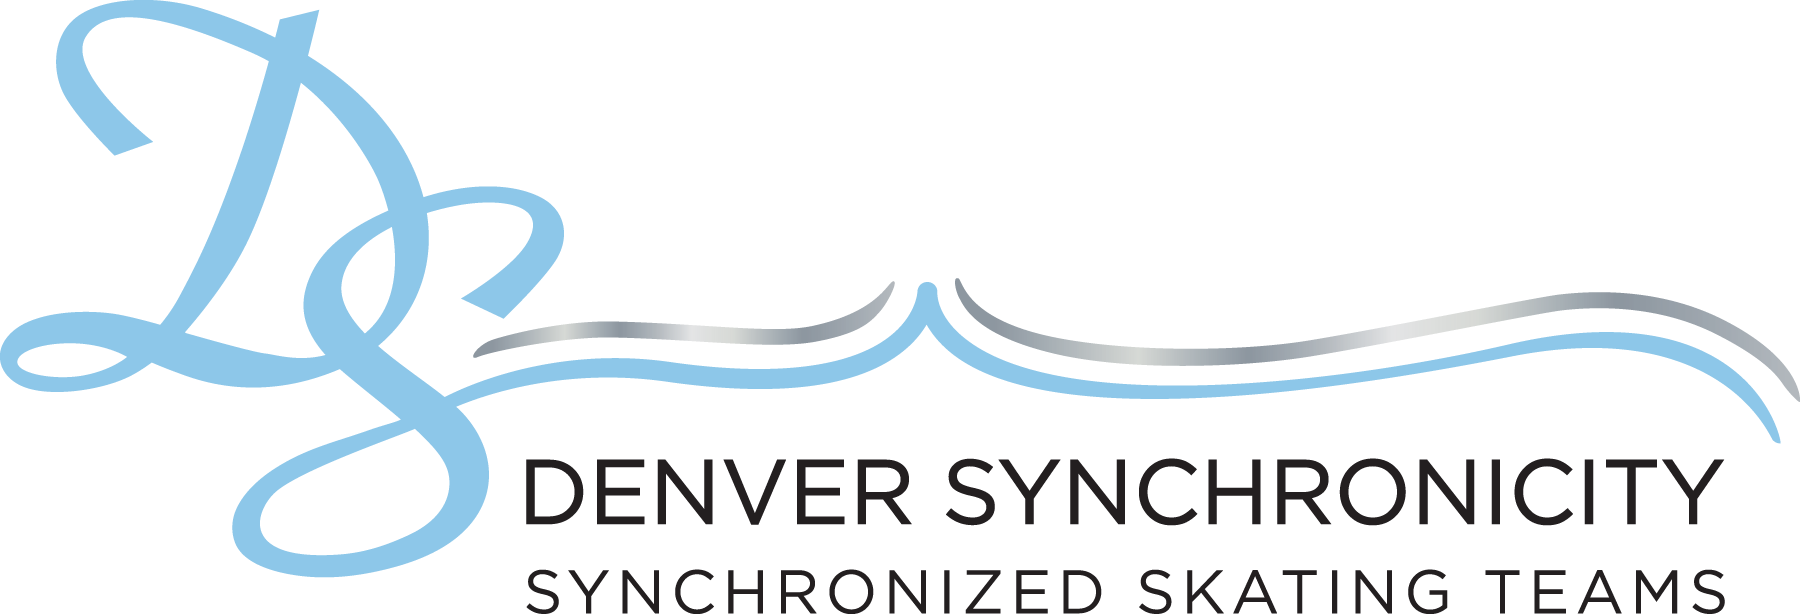 Denver Synchronicity